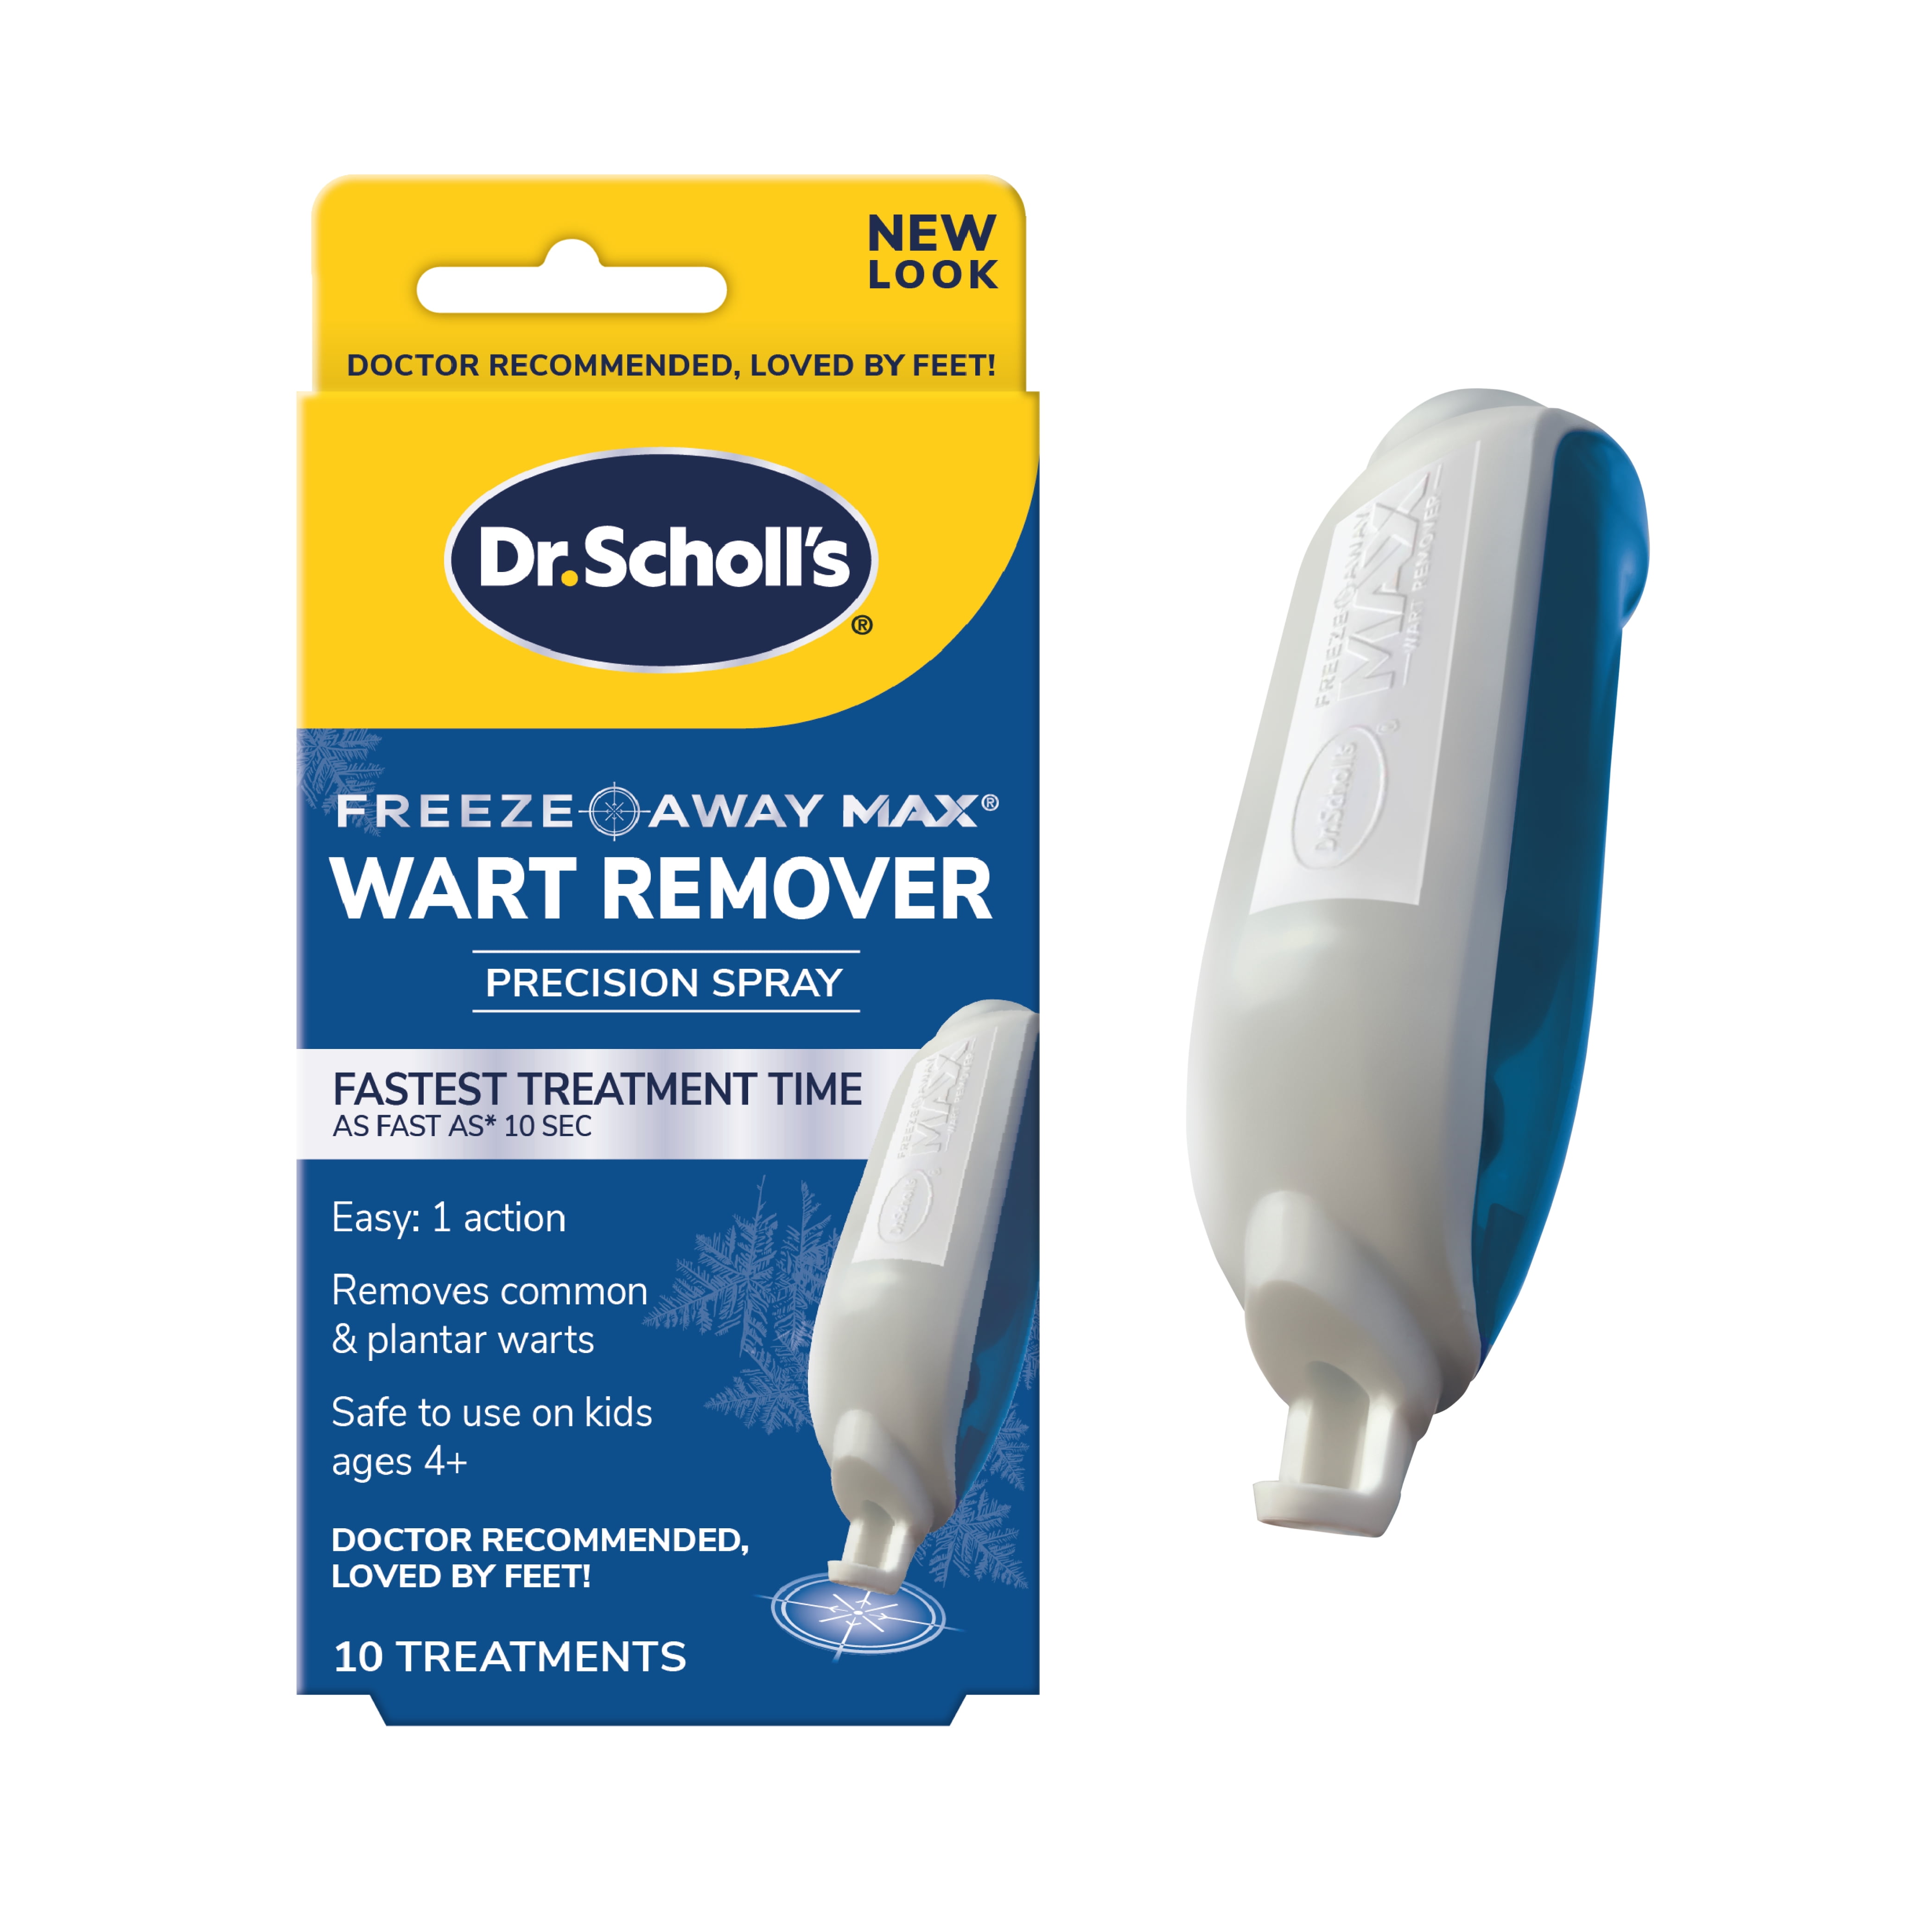 Dr Scholls Skin Tag Remover - 8 ea